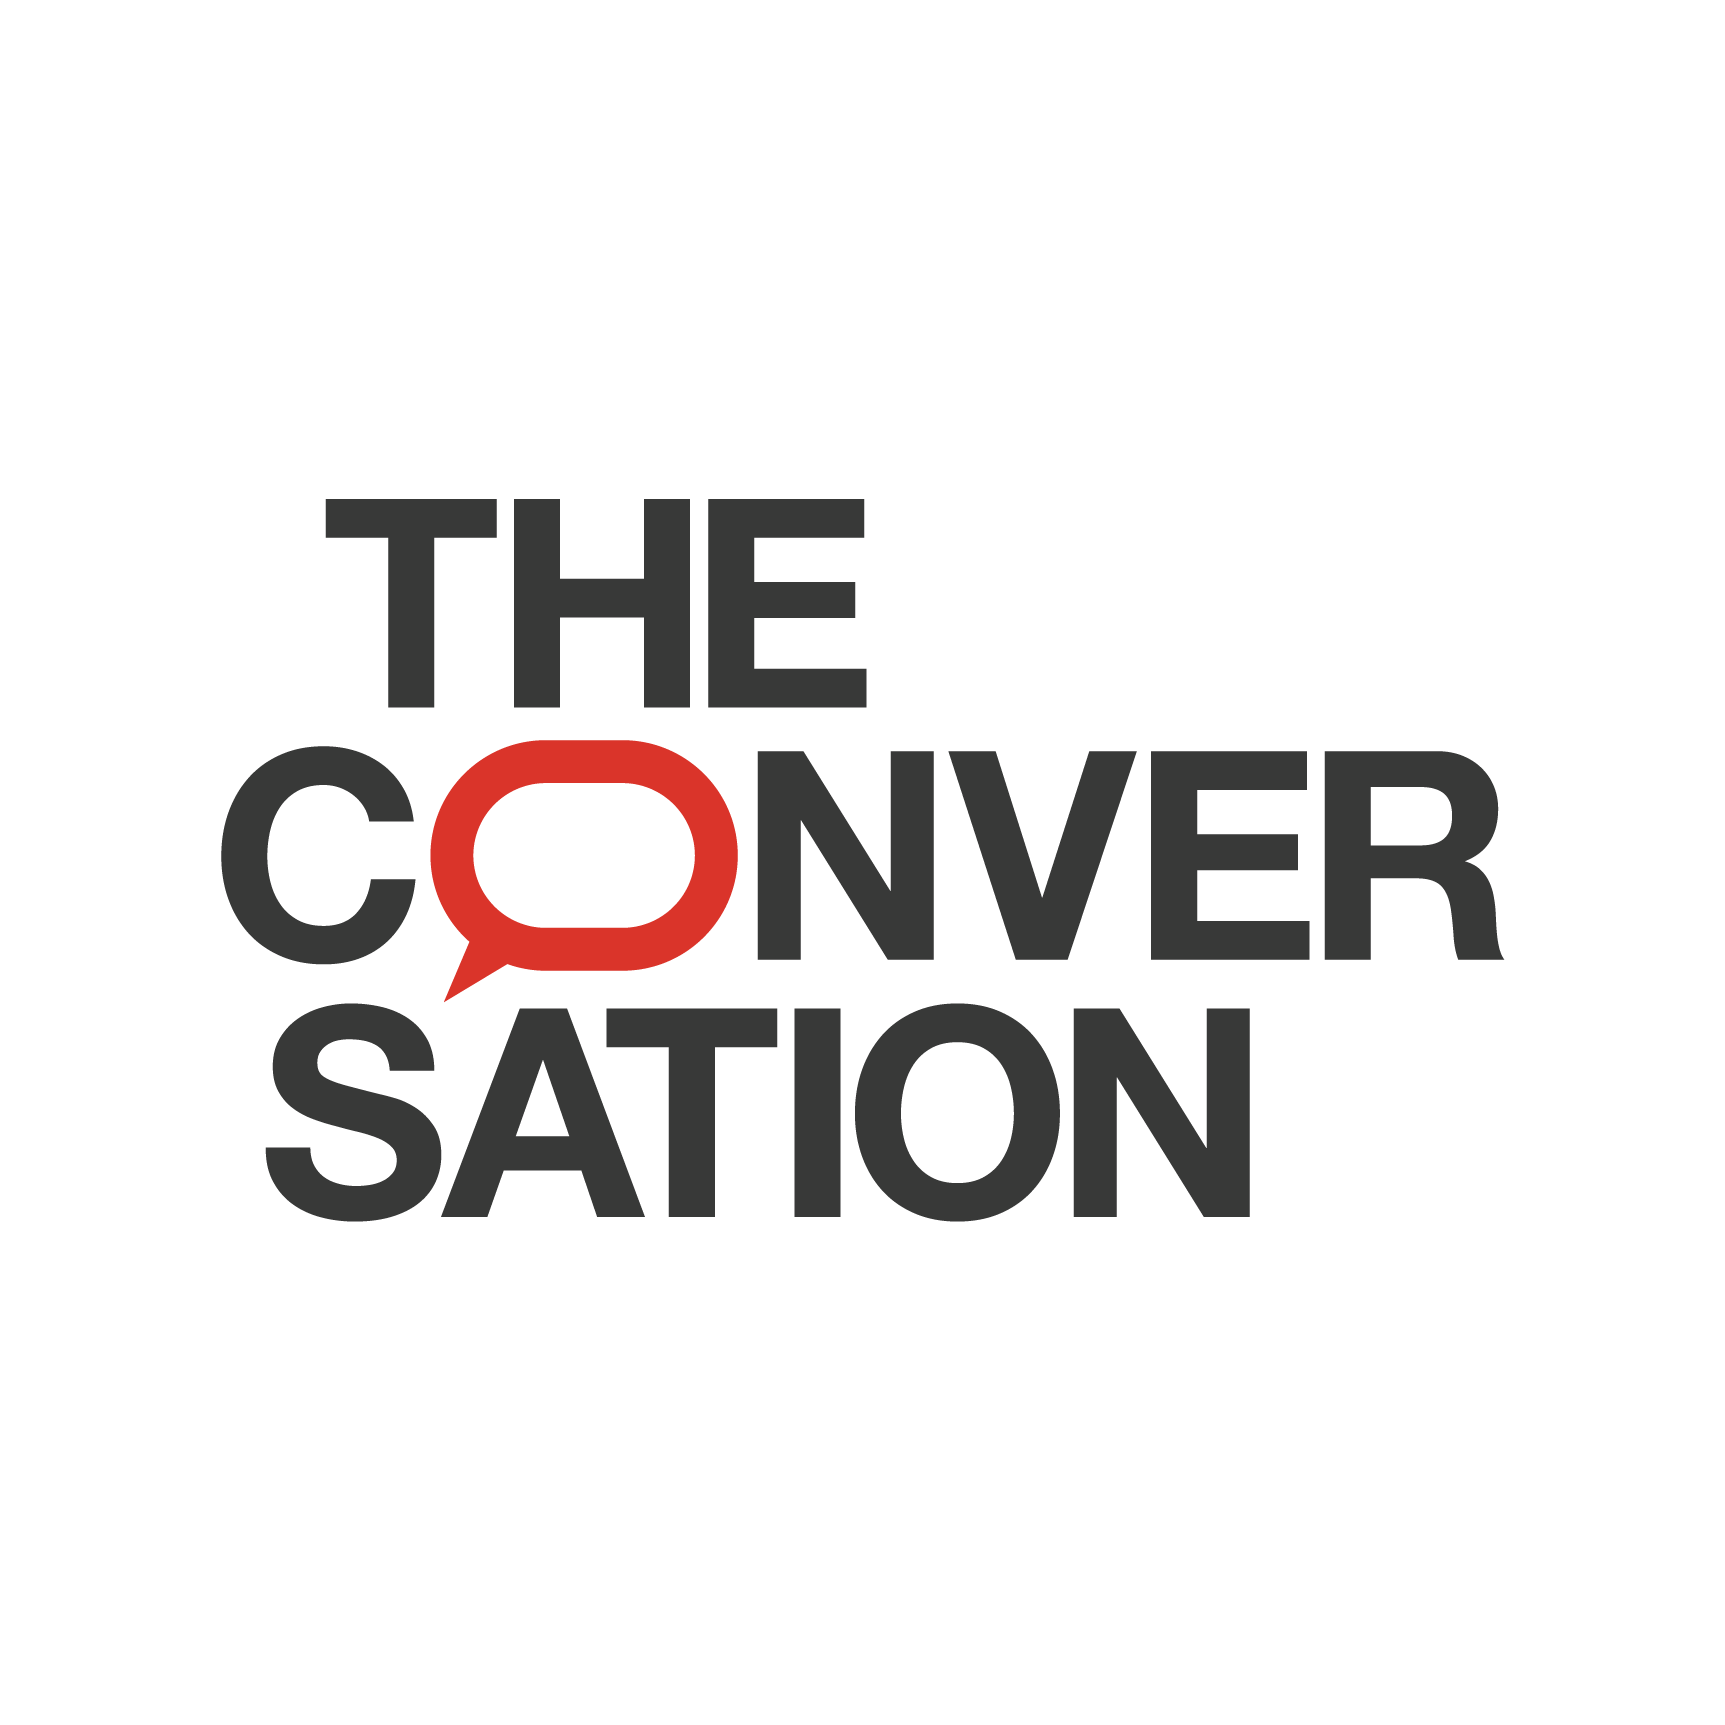 Logo, The Conversation